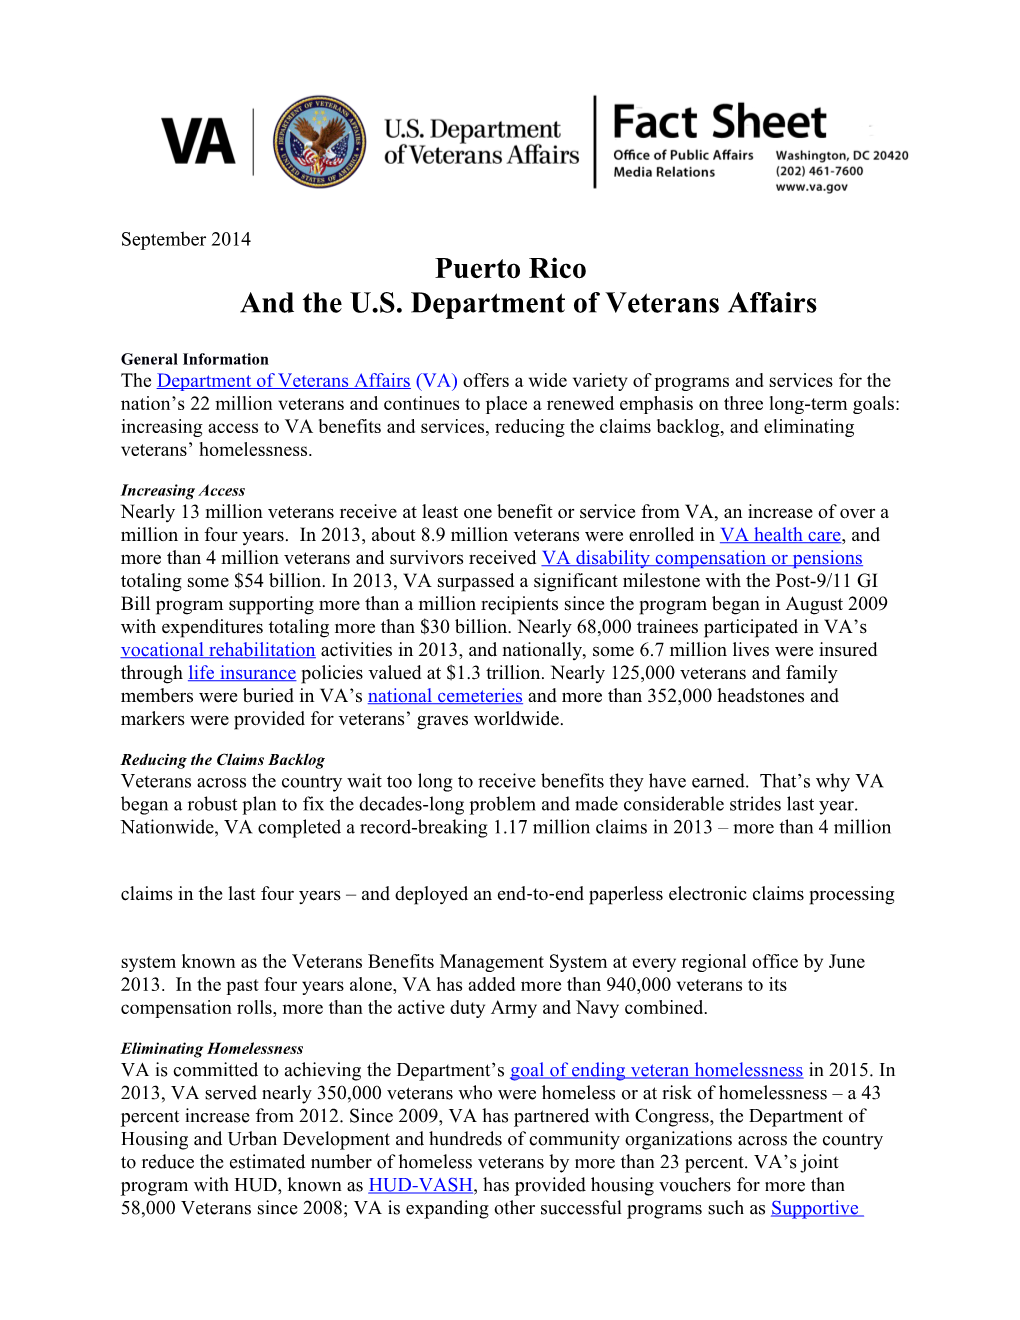 Puerto Ricoand the U.S. Department of Veterans Affairs